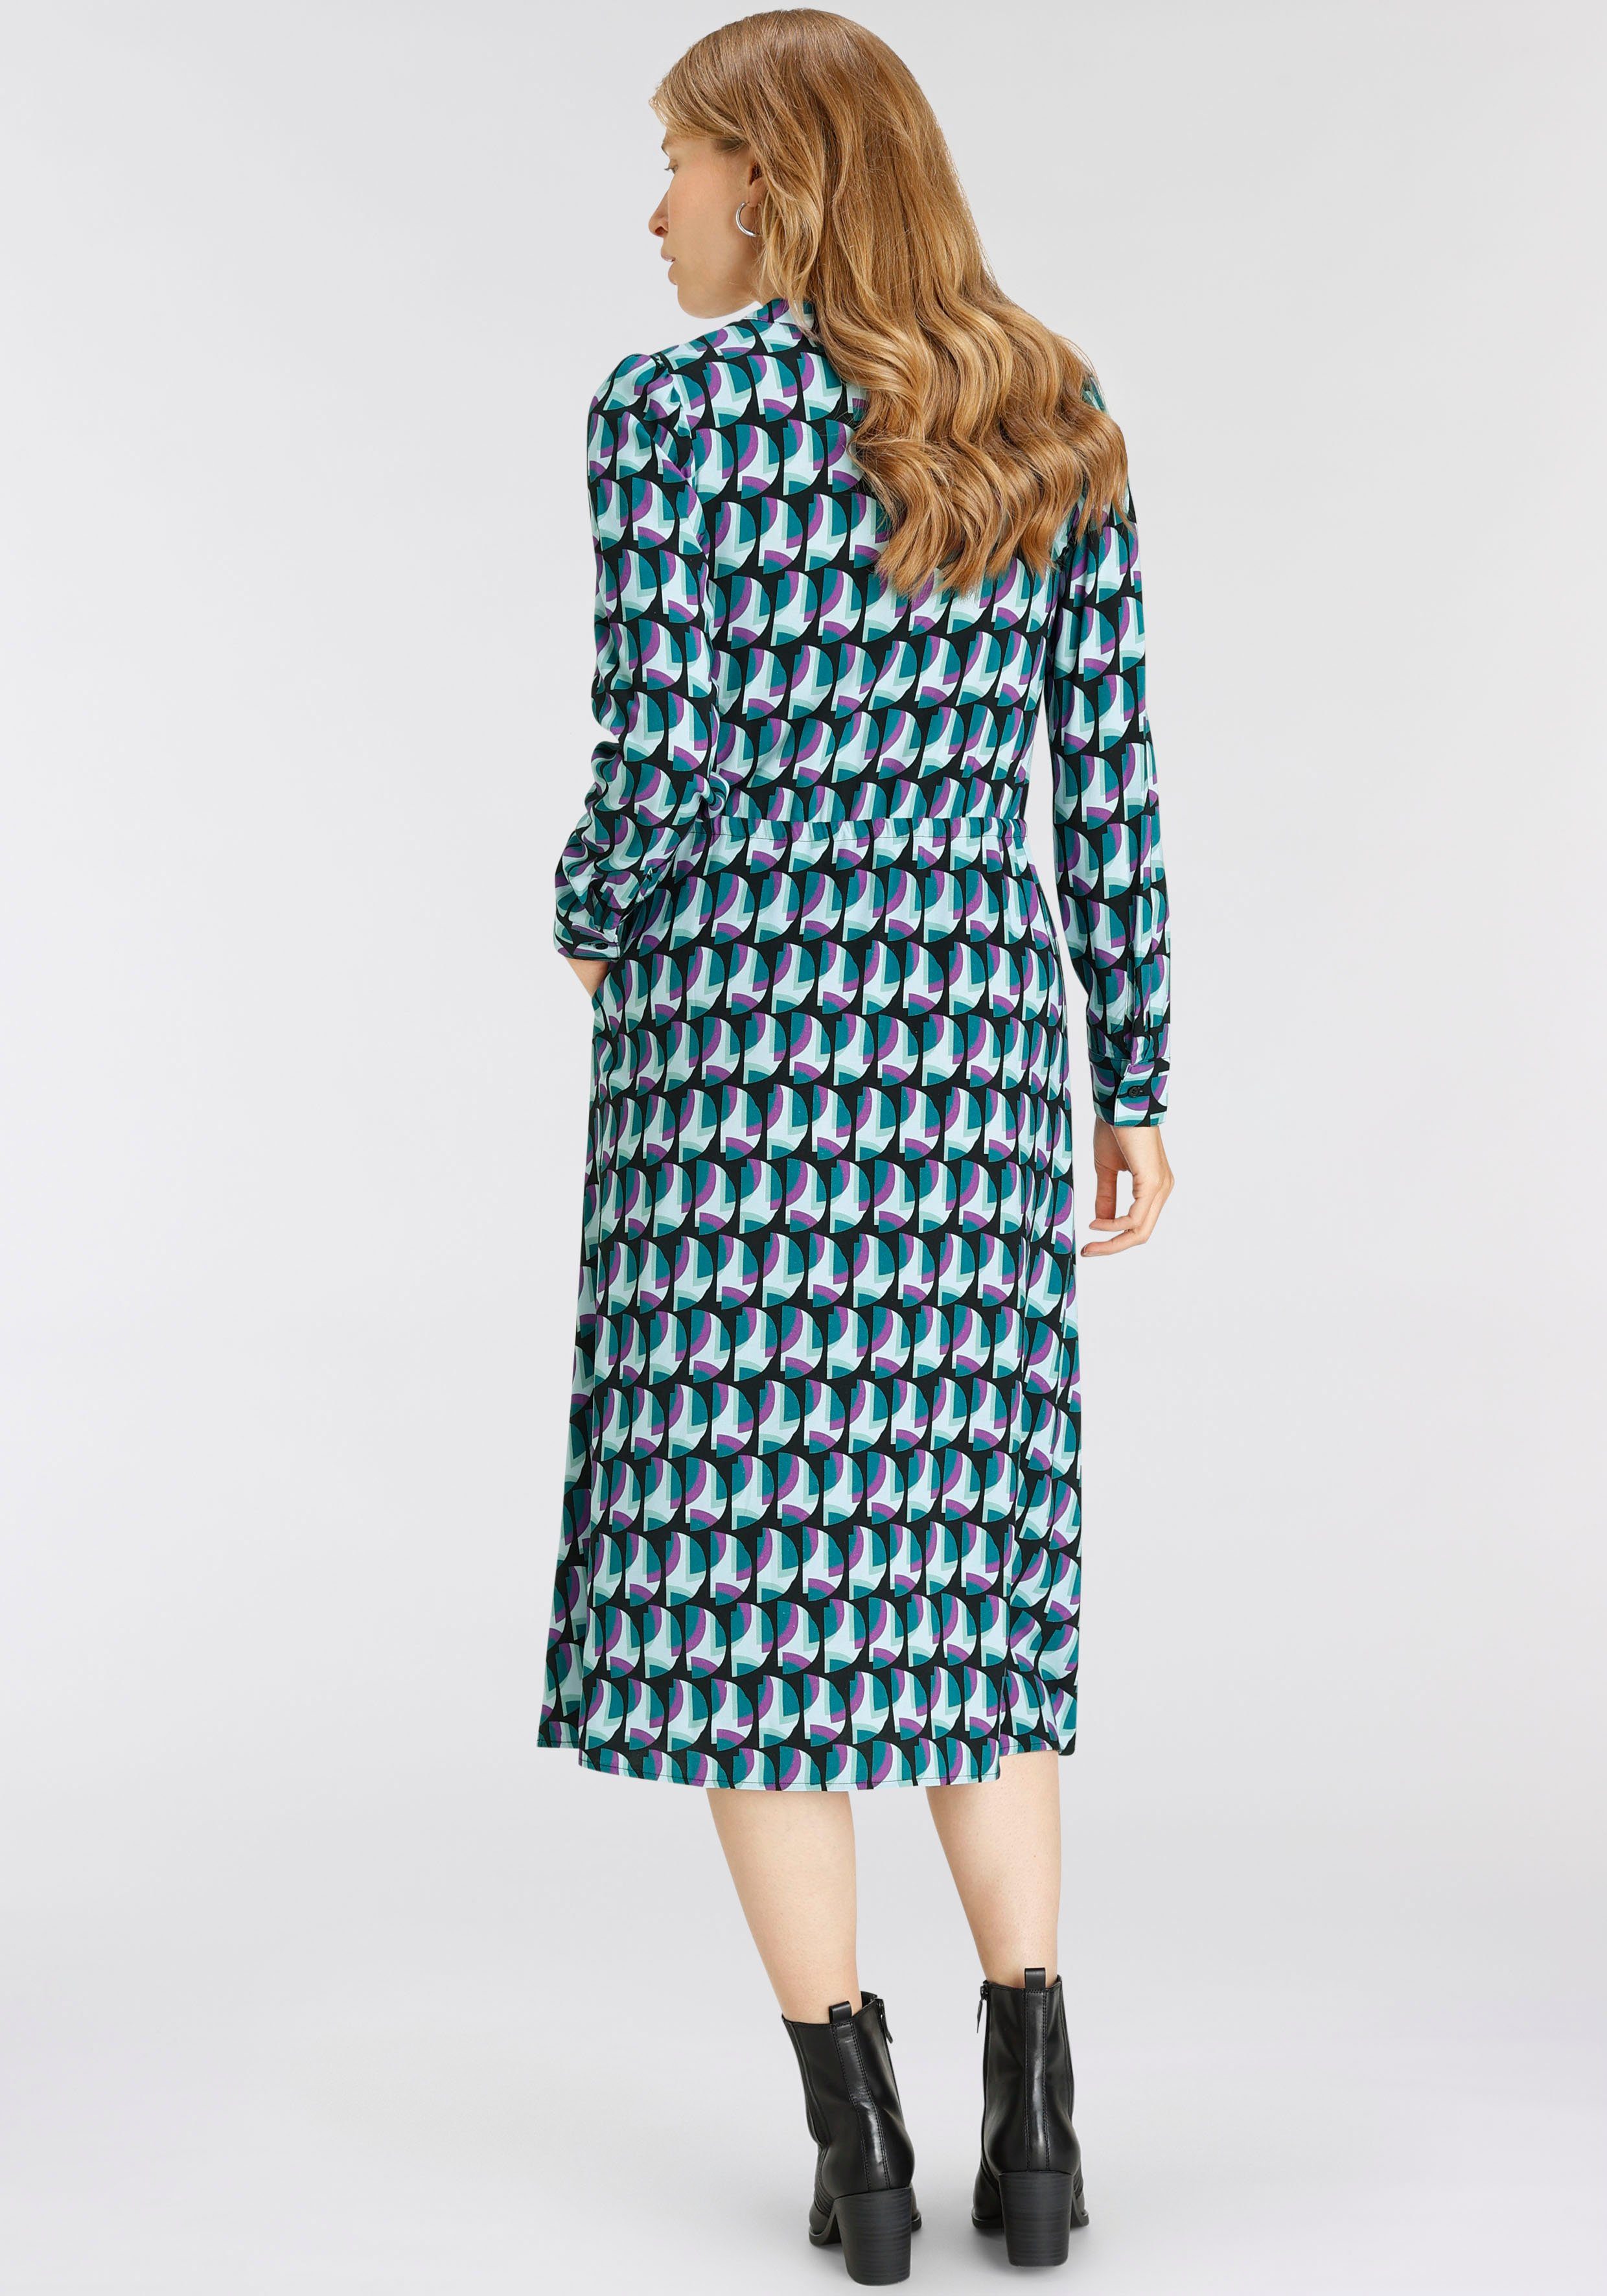 HECHTER PARIS elegantem Allover-Print Hemdblusenkleid mit